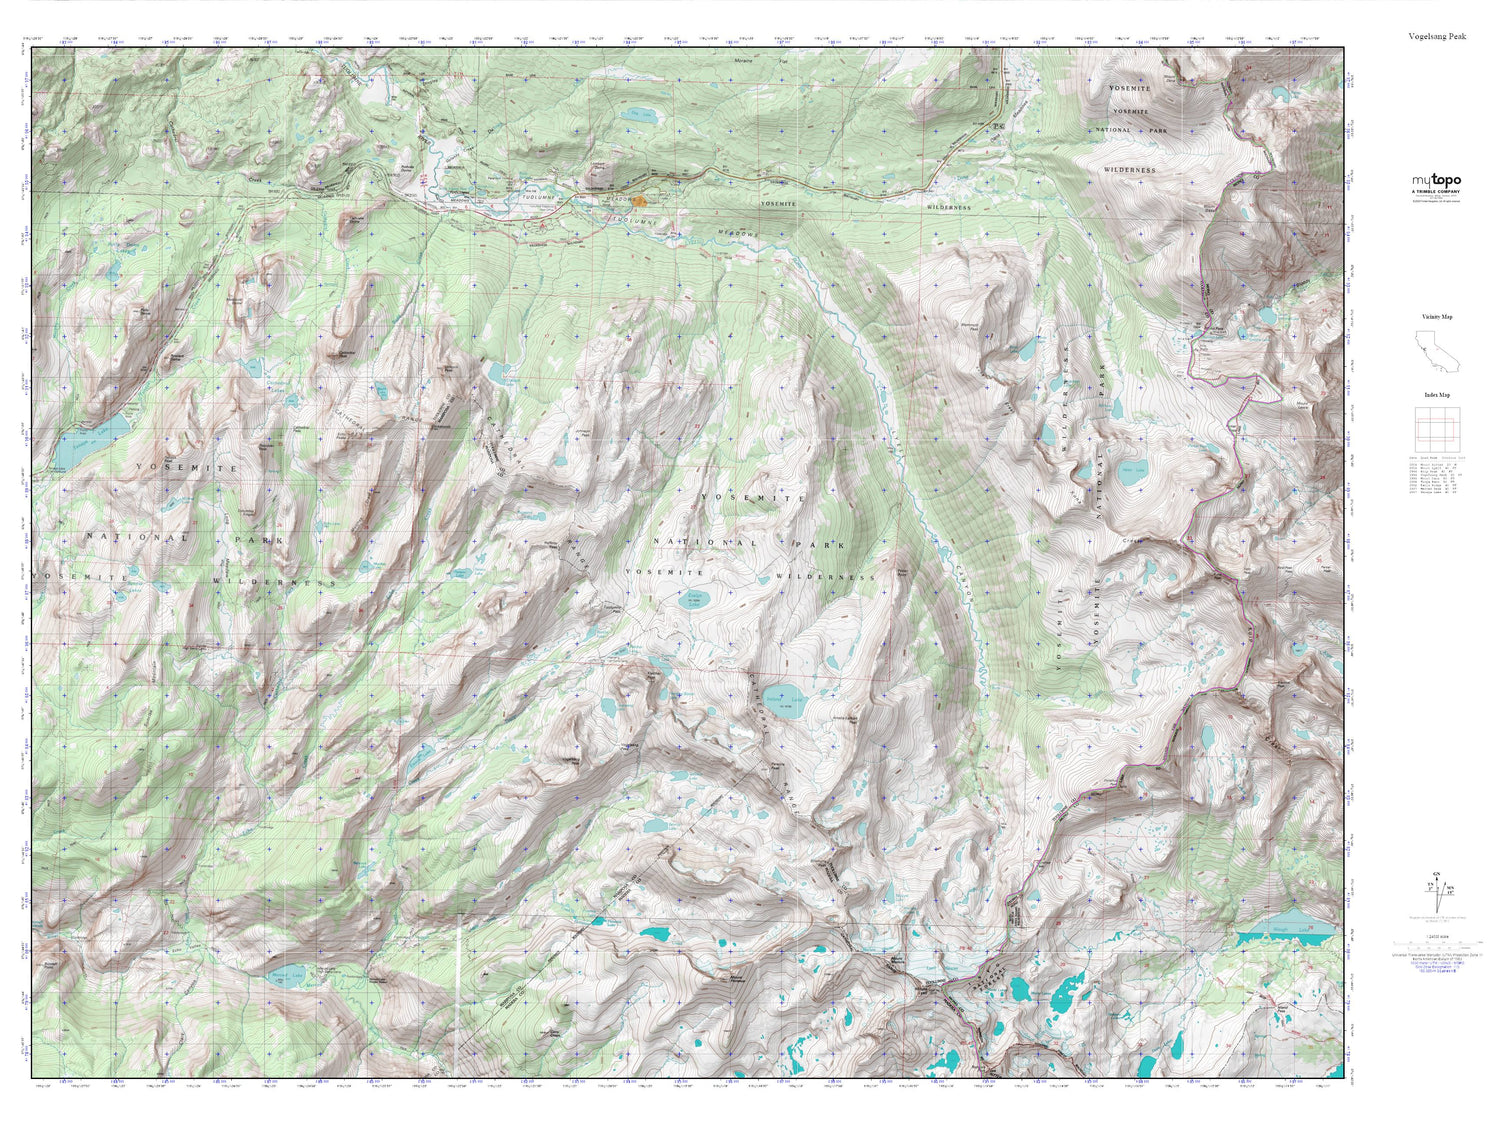 Vogelsang Peak MyTopo Explorer Series Map Image